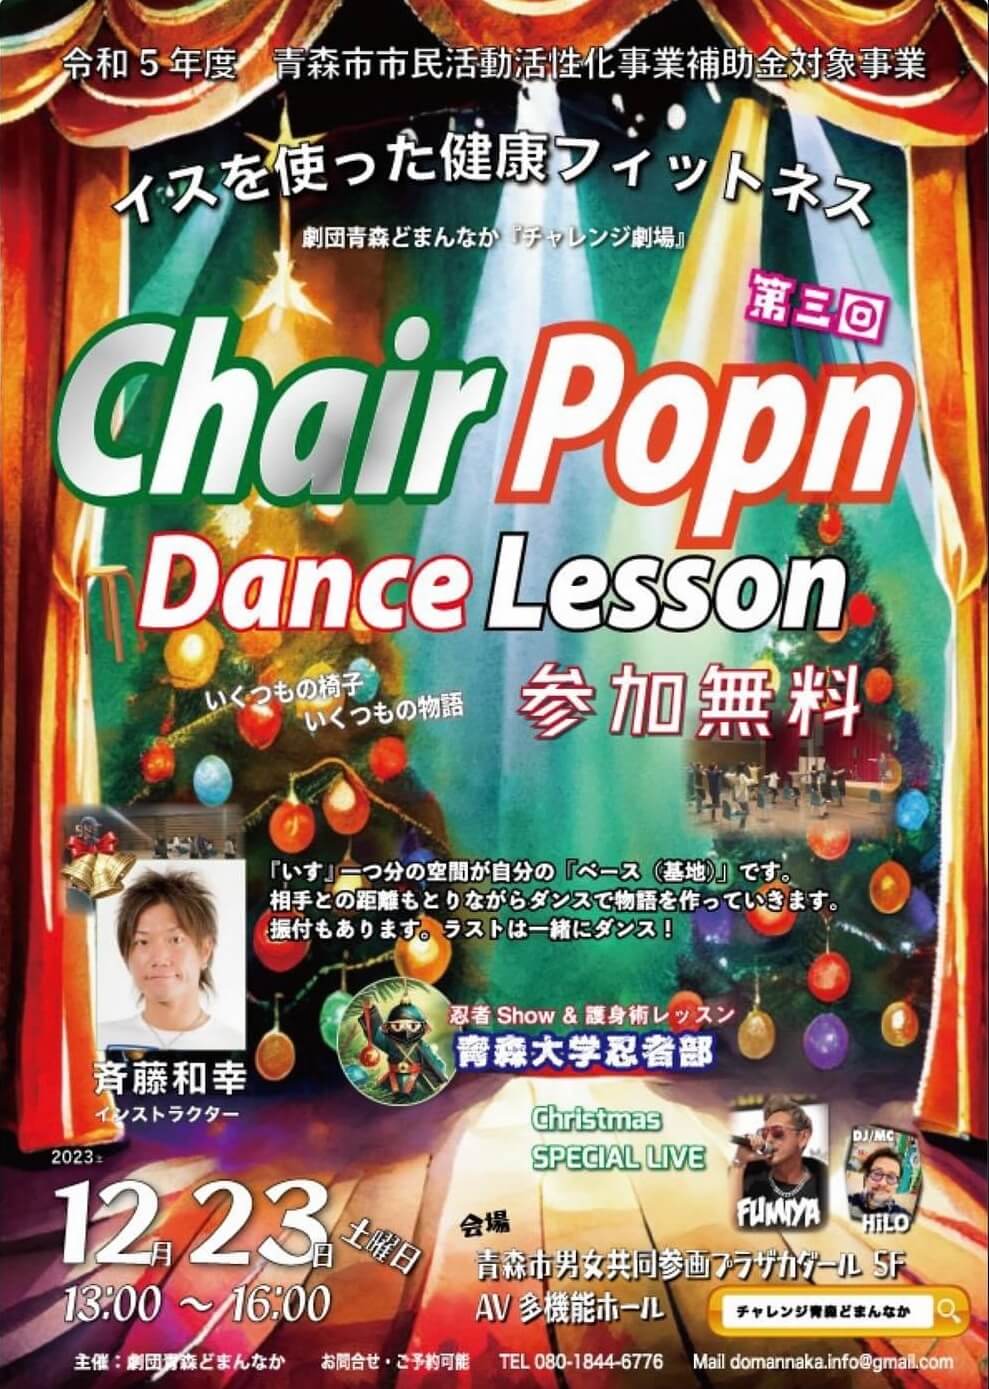 第3回 Chair Popn Dance Lesson | 青森県青森市